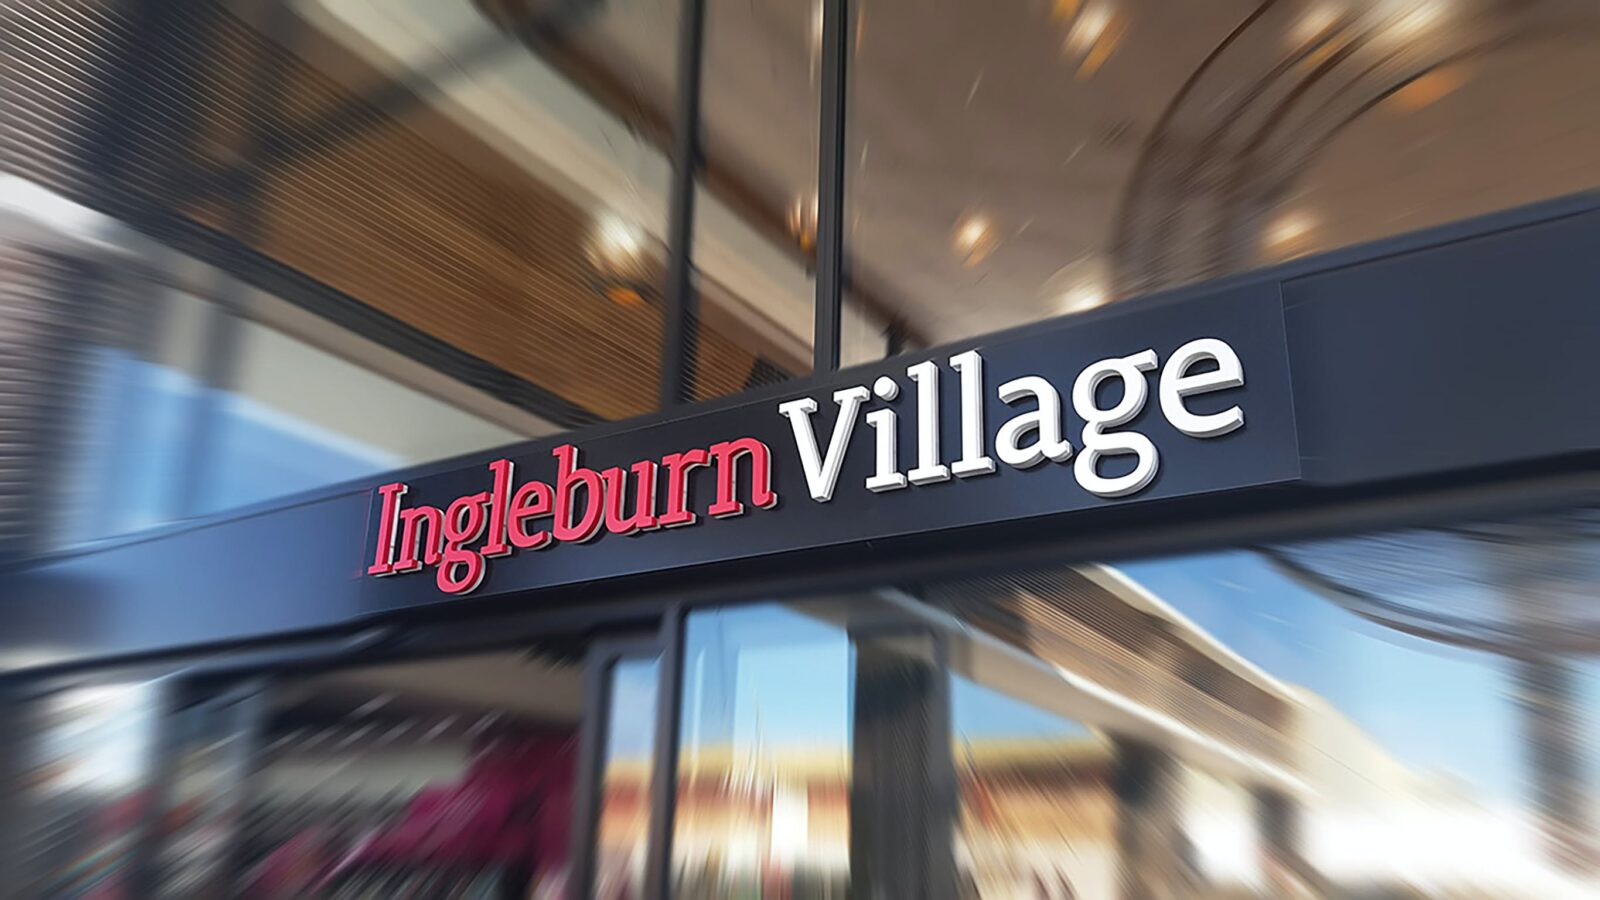 Ingleburn Village